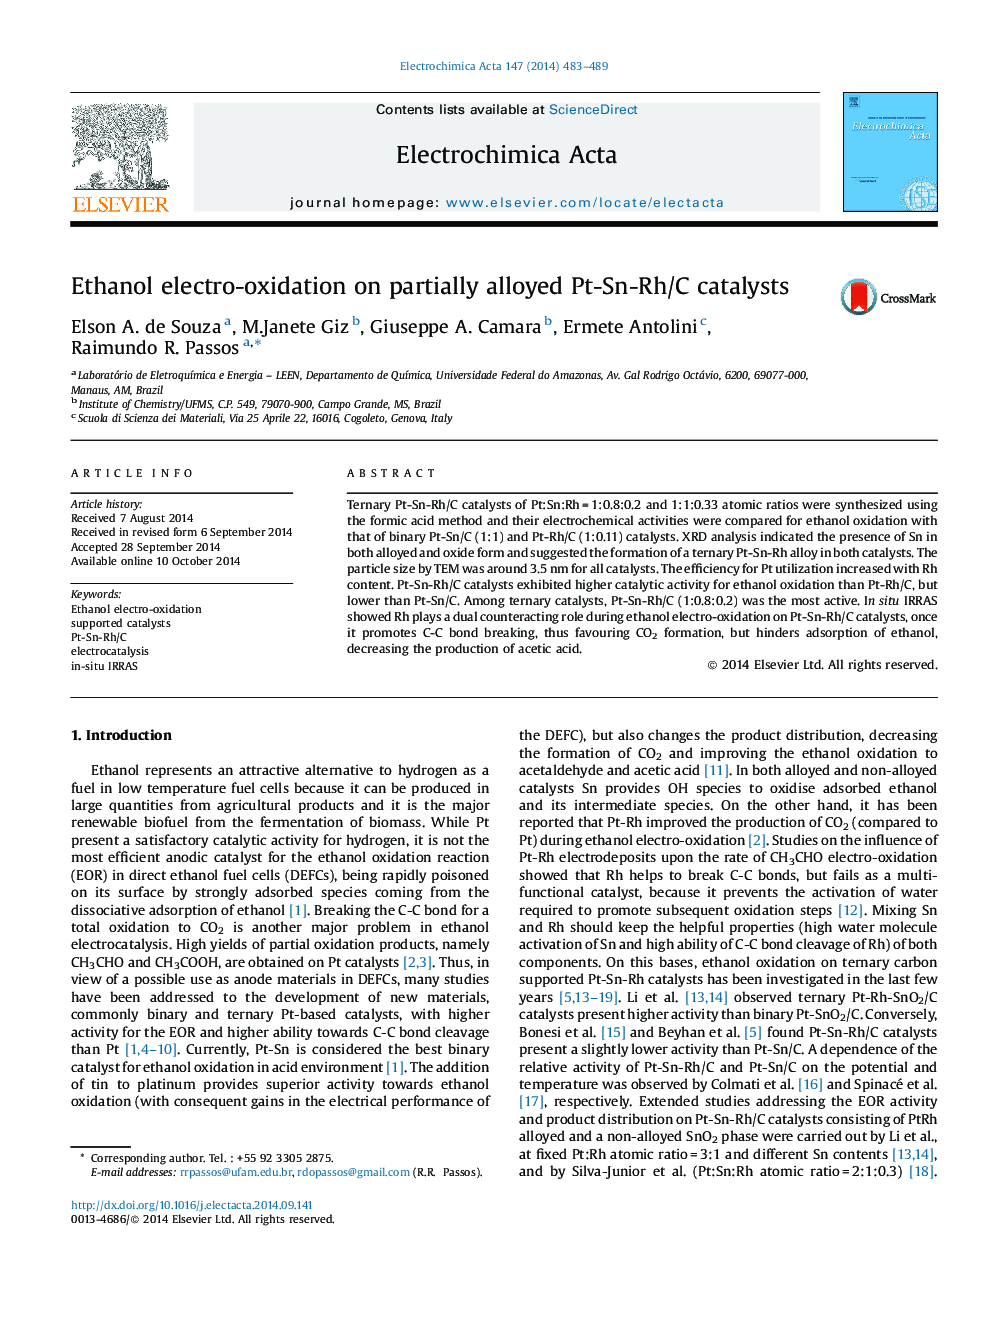 Ethanol electro-oxidation on partially alloyed Pt-Sn-Rh/C catalysts